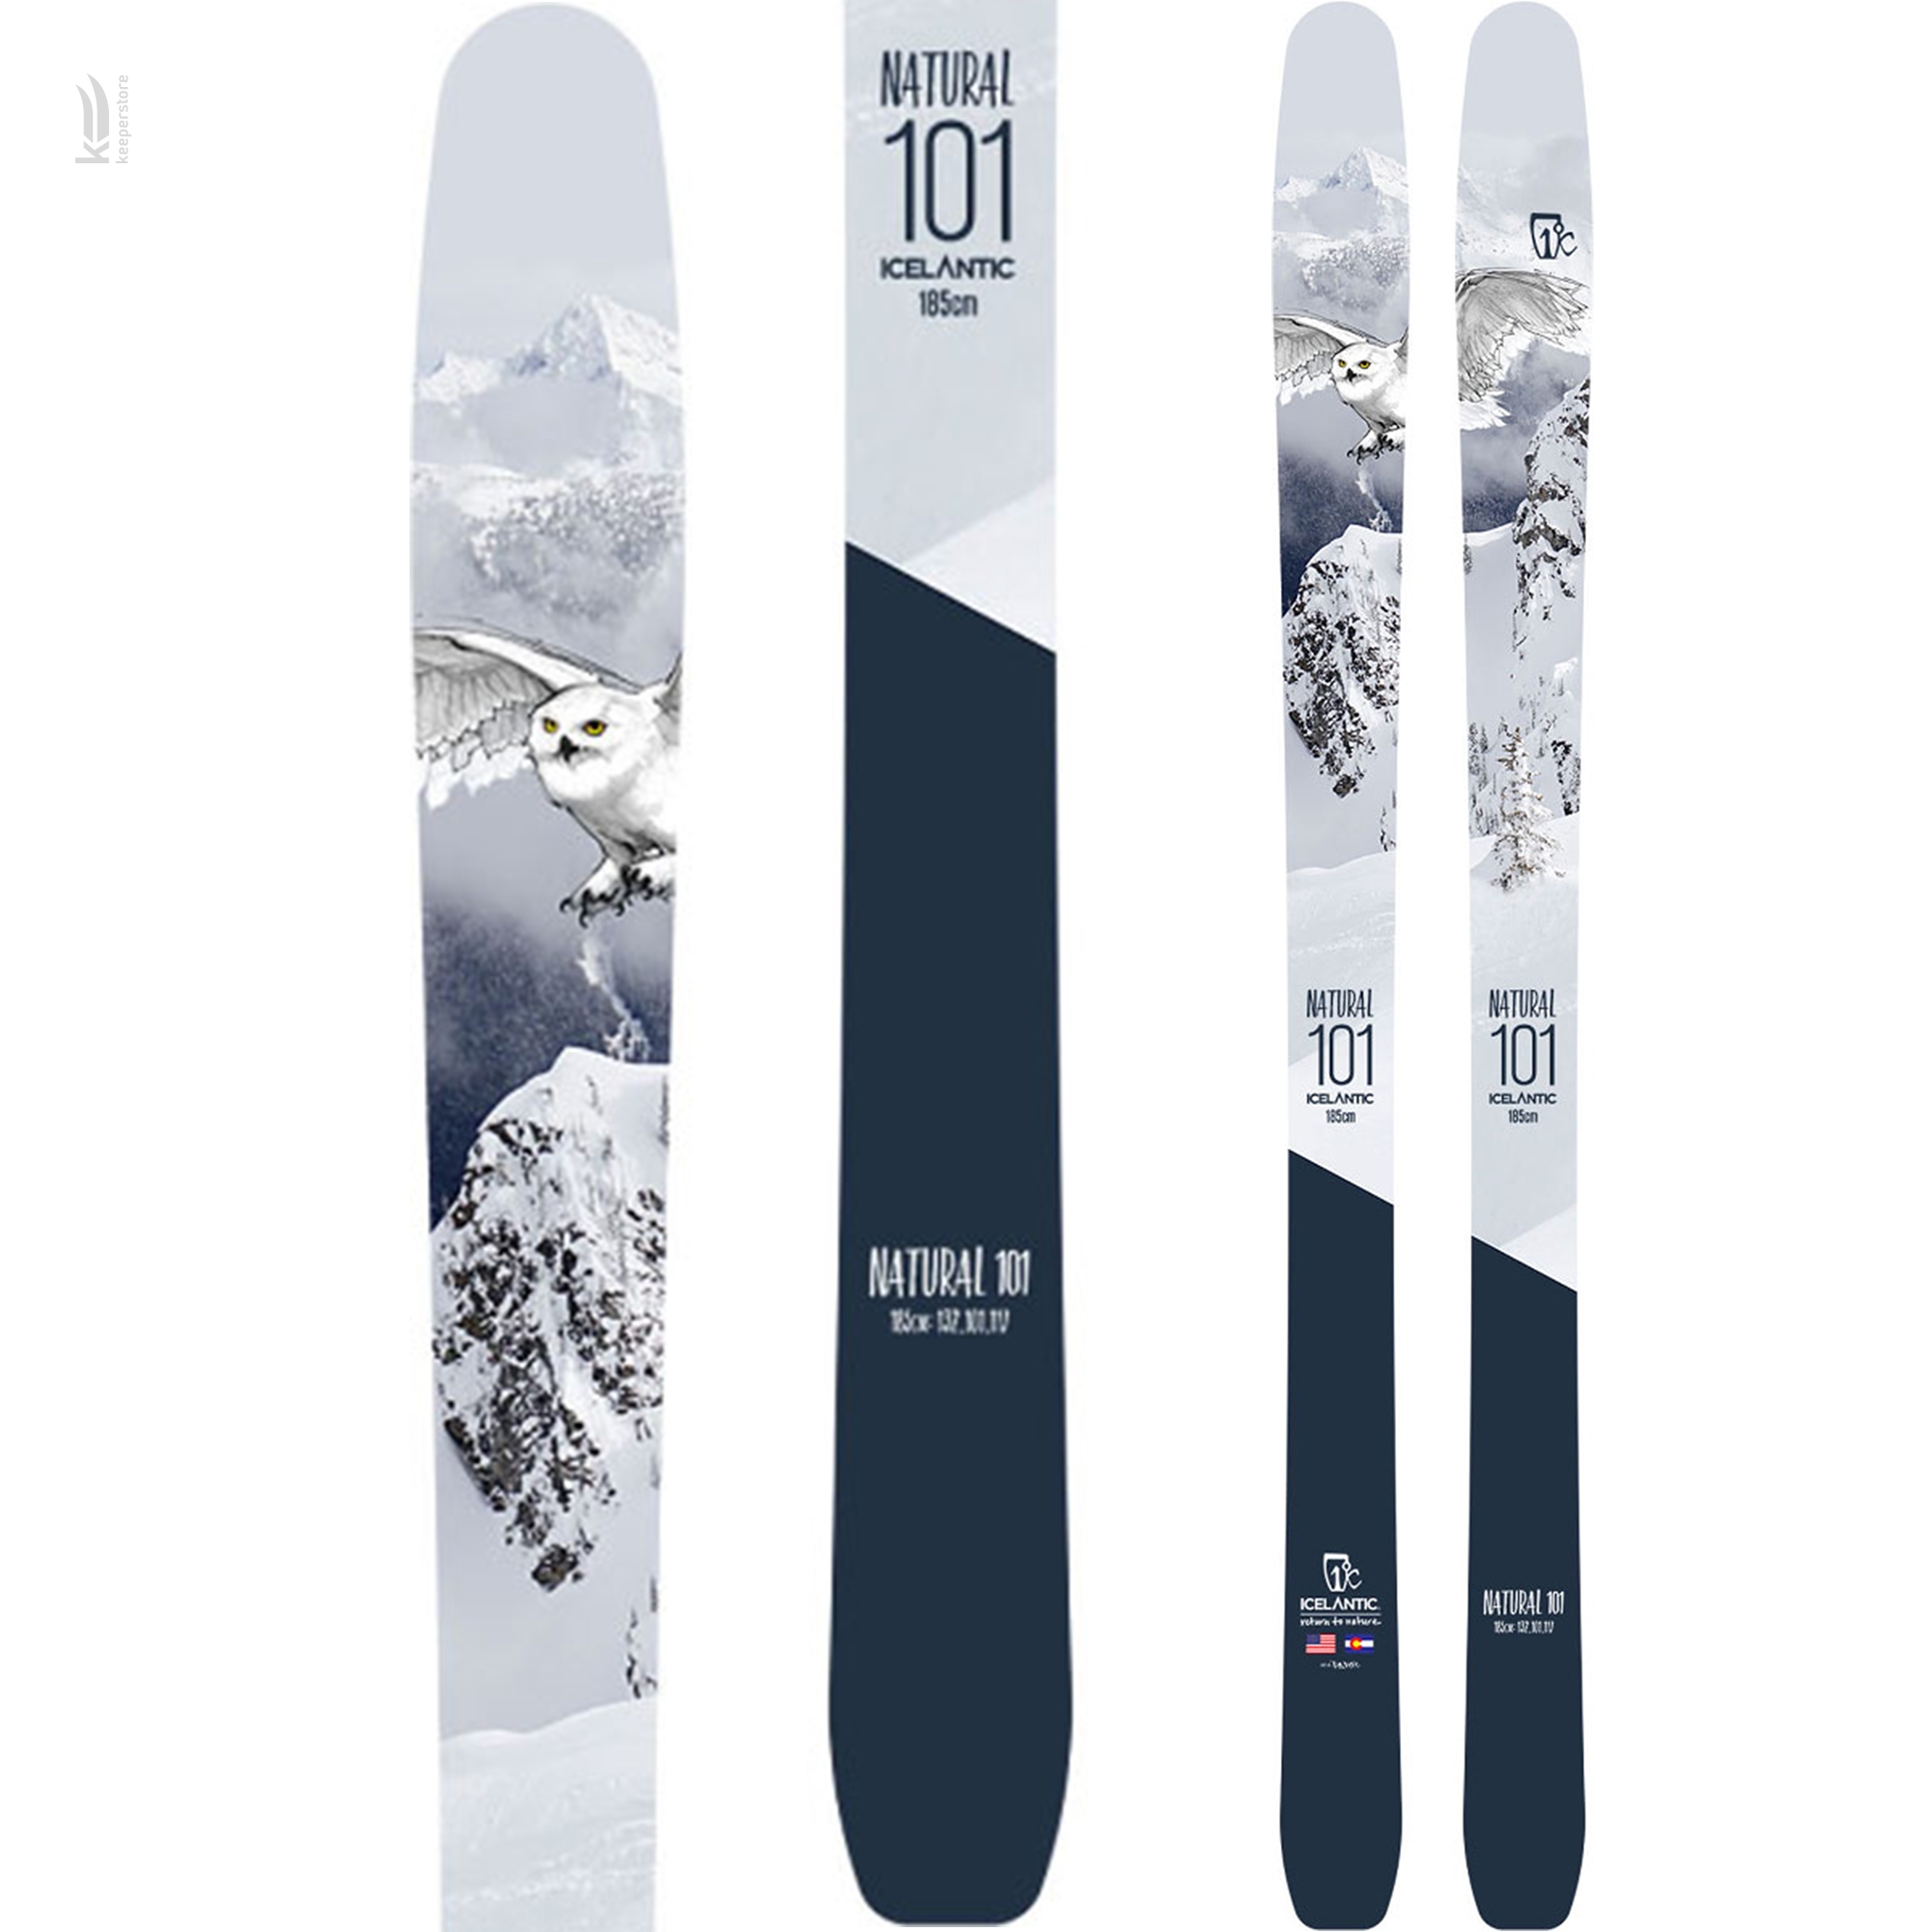 Лыжи для фрирайда Icelantic Natural 101 2018/2019 185cm